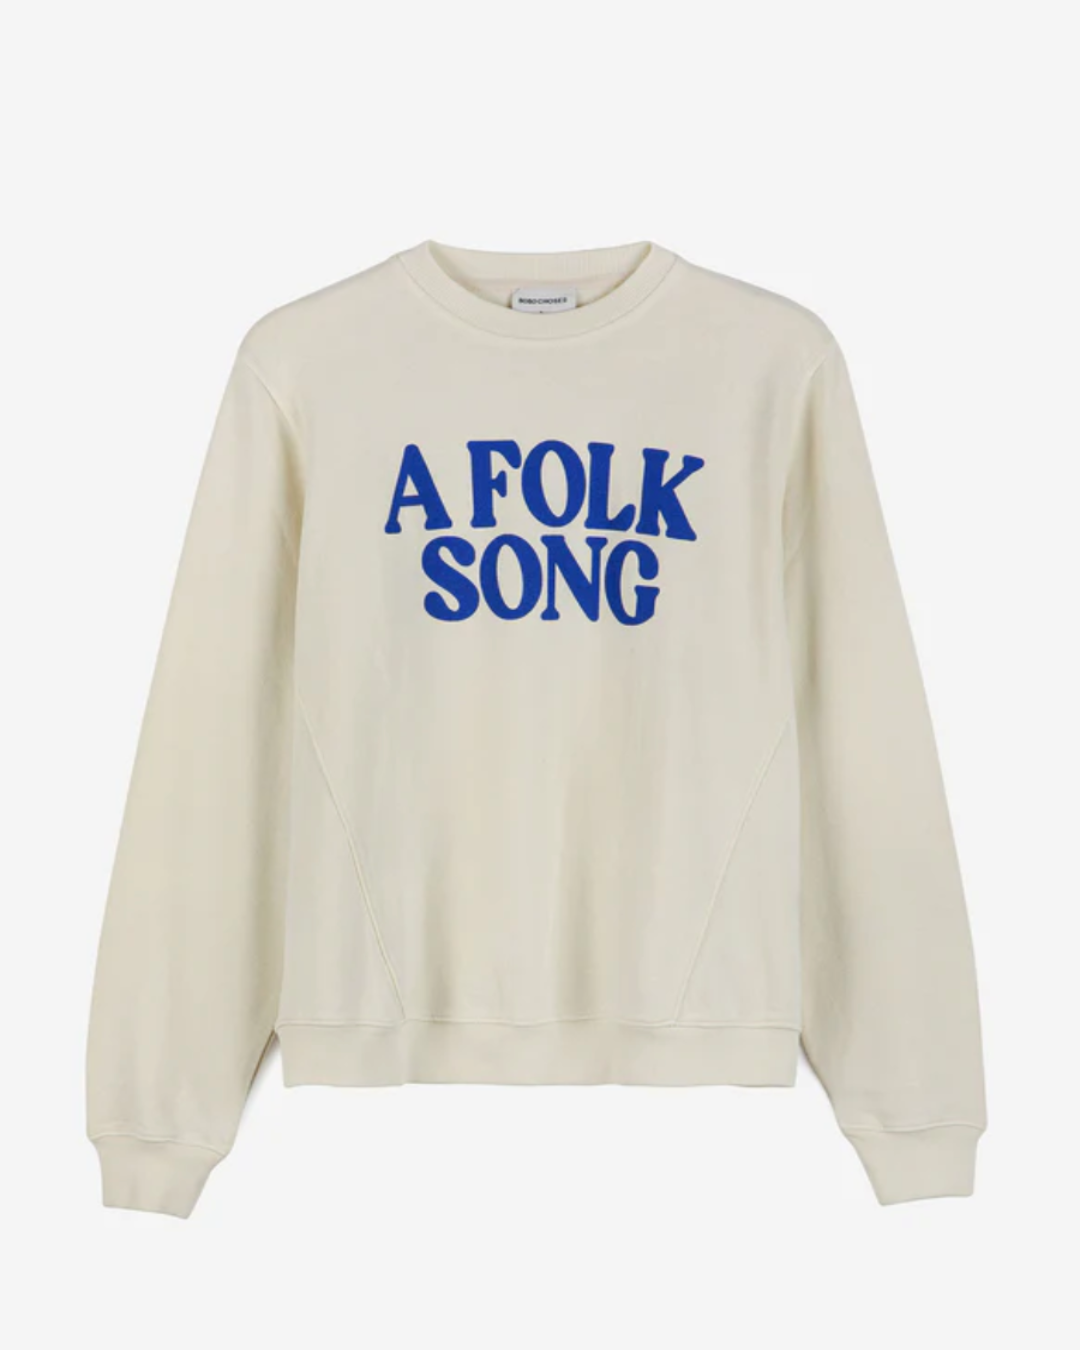 A Folk Song Sweatshirt